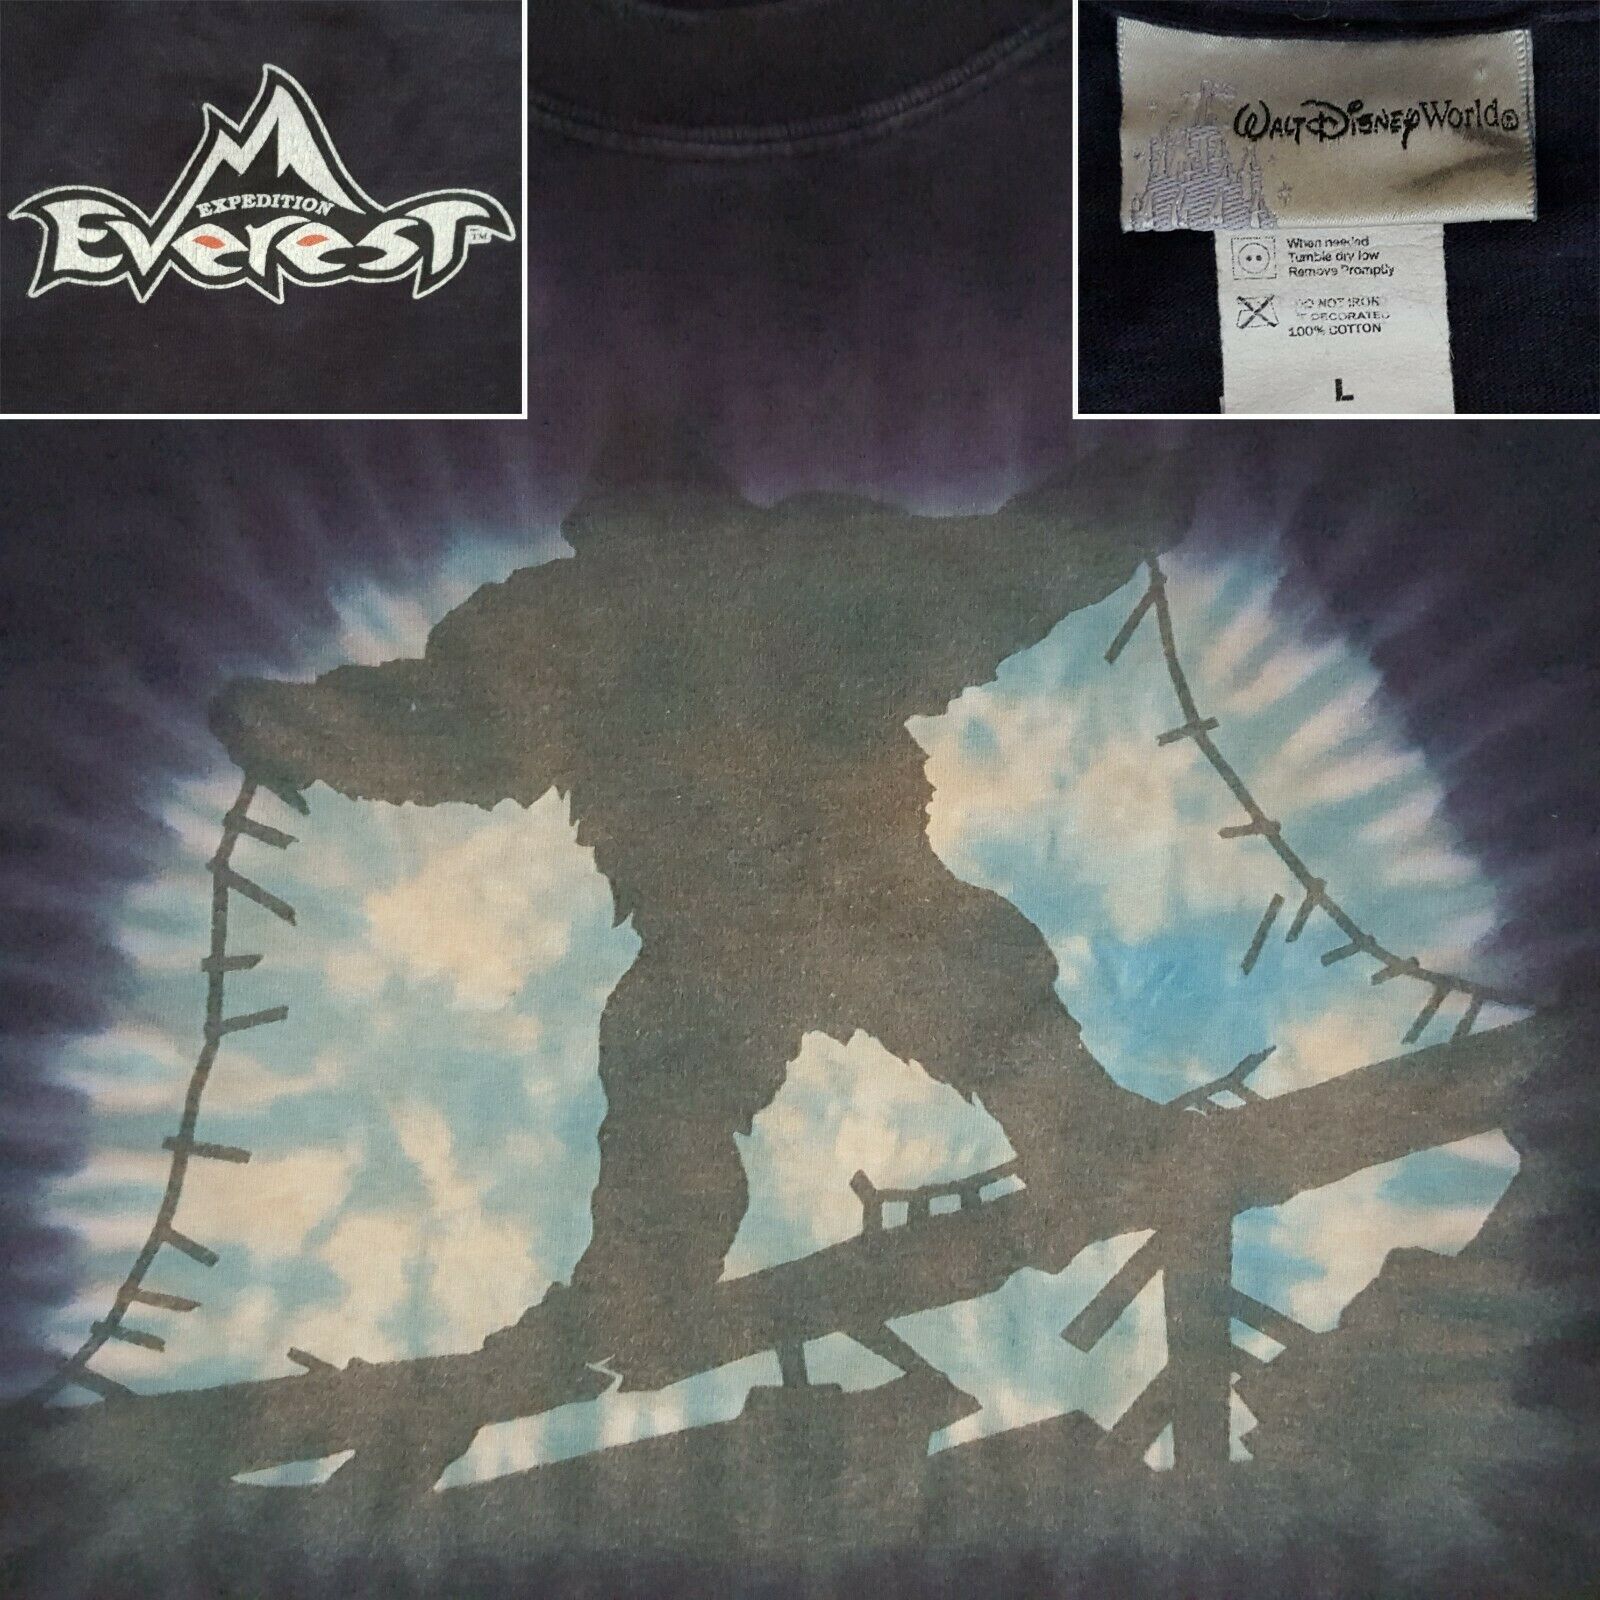 Walt Disney World Expedition Everest Blue Cotton Men's L T-shirt. Yeti On Bridge